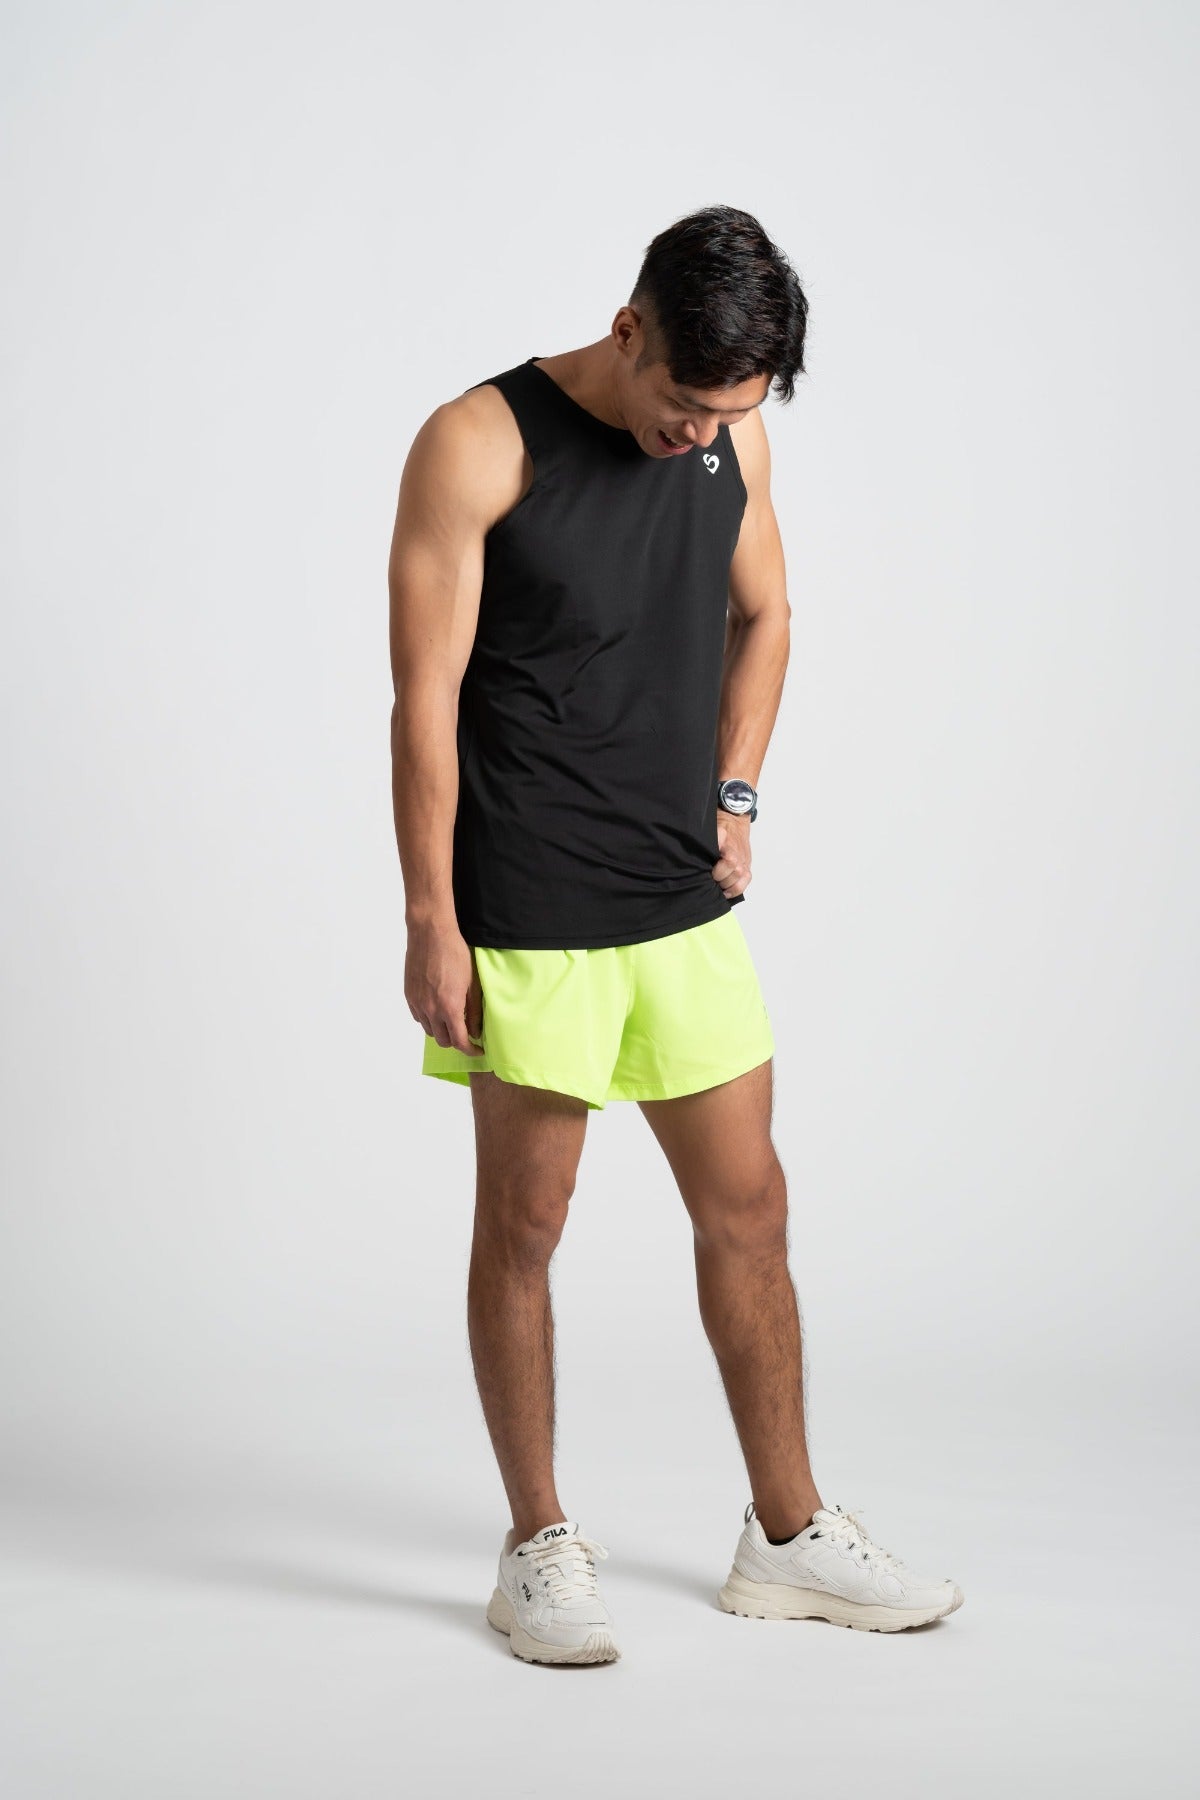 Men's lime green running shorts, back zip pocket